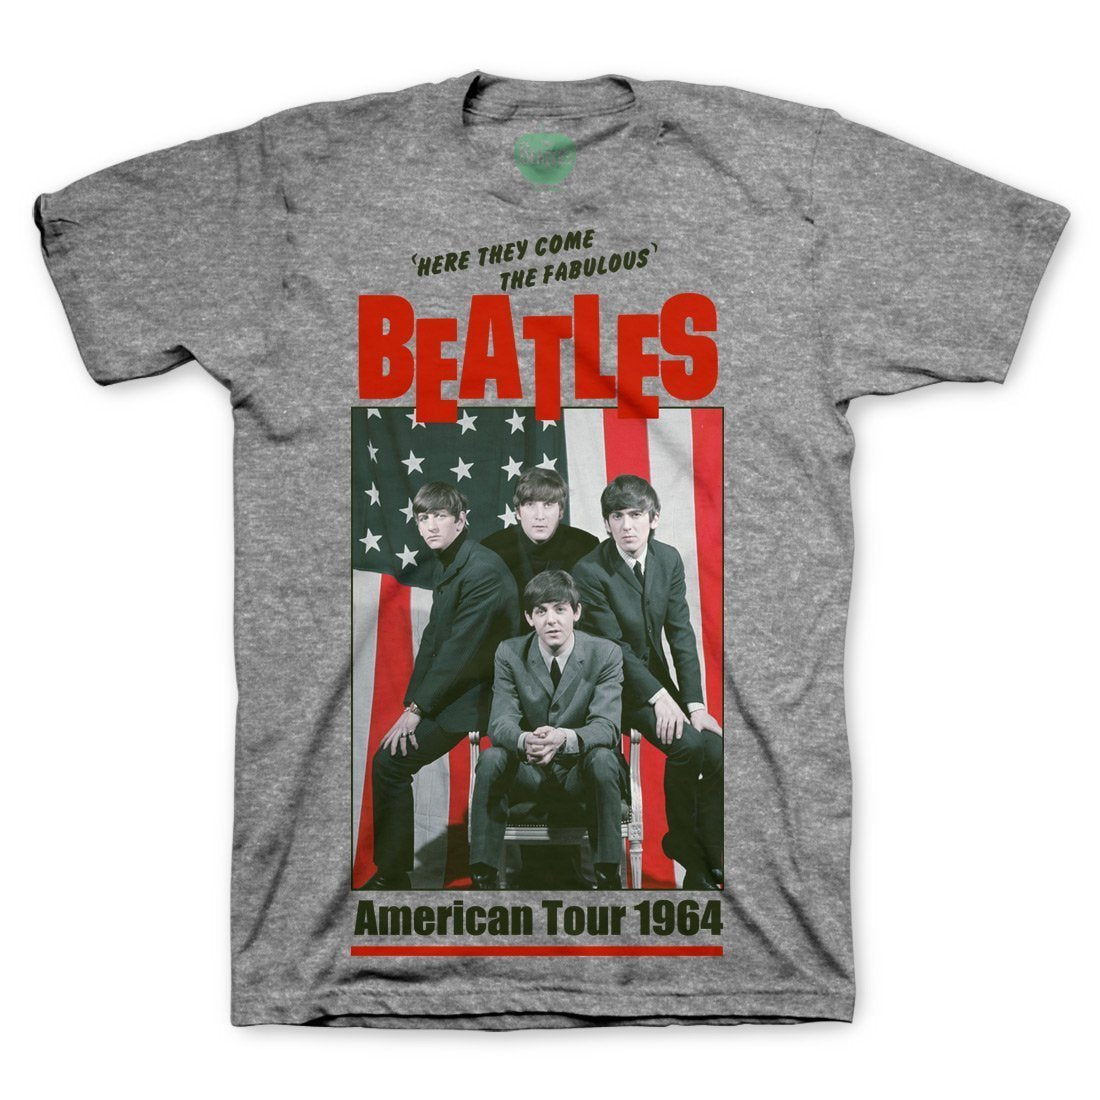 The Beatles | American Tour 1964 T-Shirt